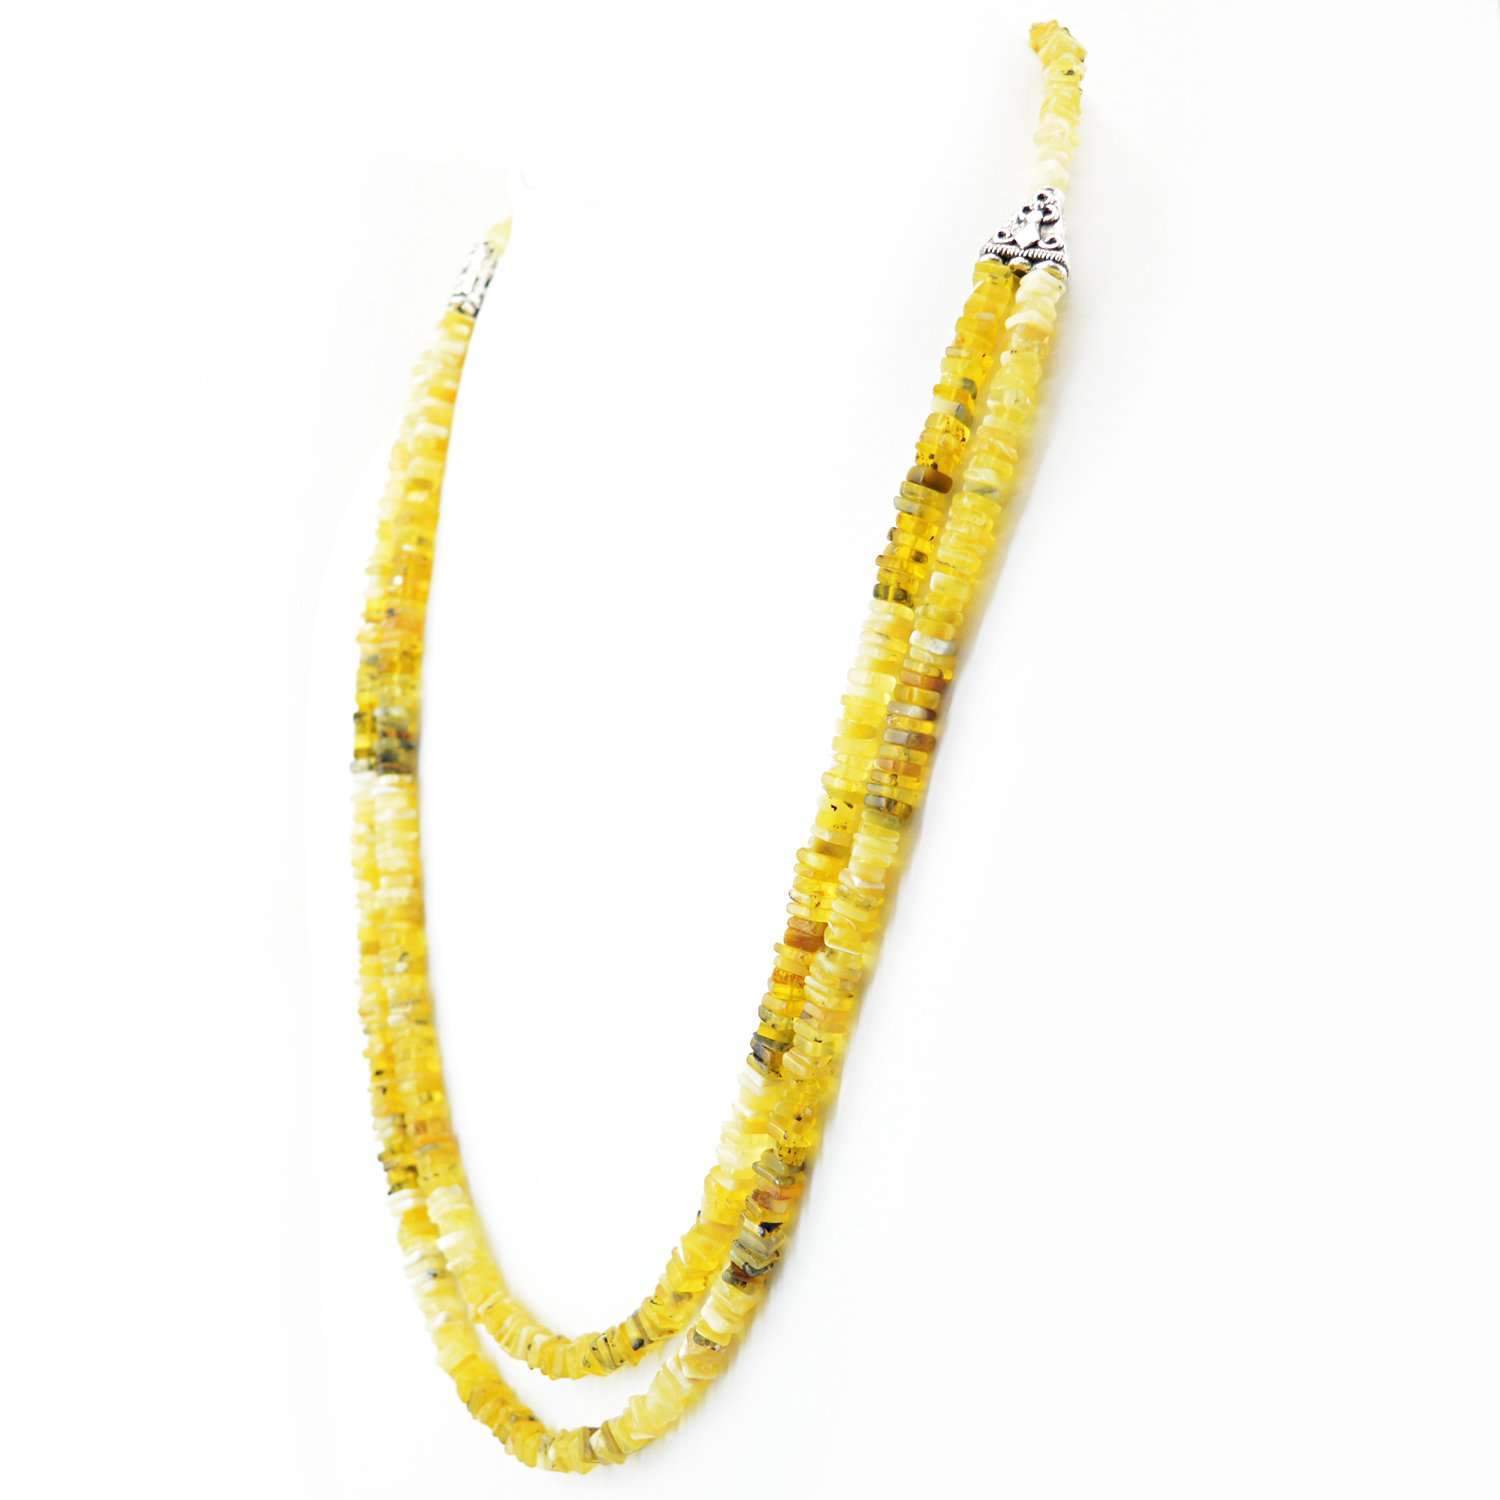 gemsmore:Peruvian Opal Necklace Natural 2 Strand Genuine Beads - Best Quality